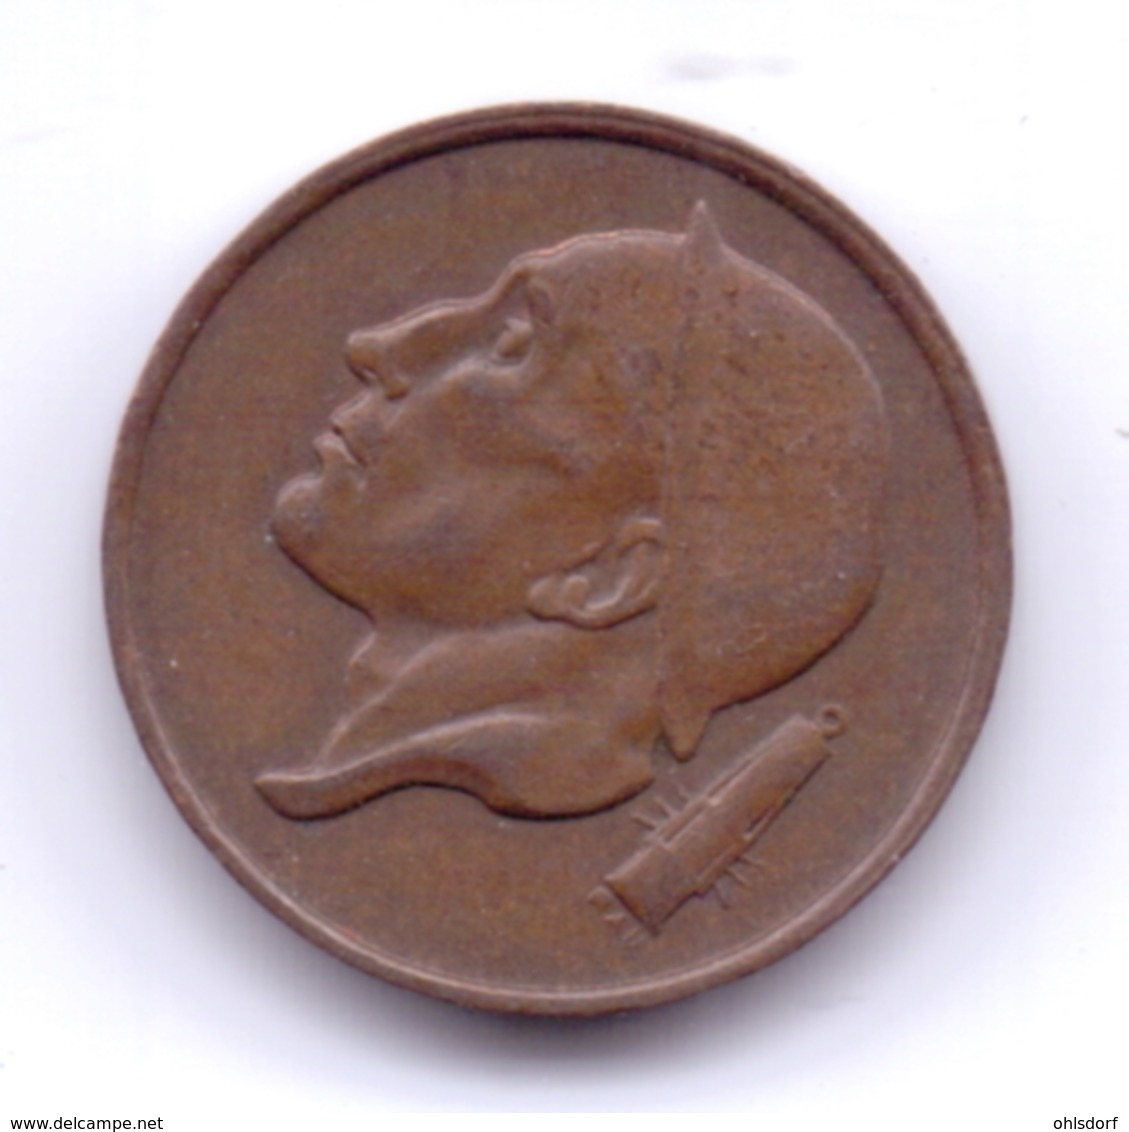 BELGIE 1957: 50 Centimes, KM 149 - 50 Cent